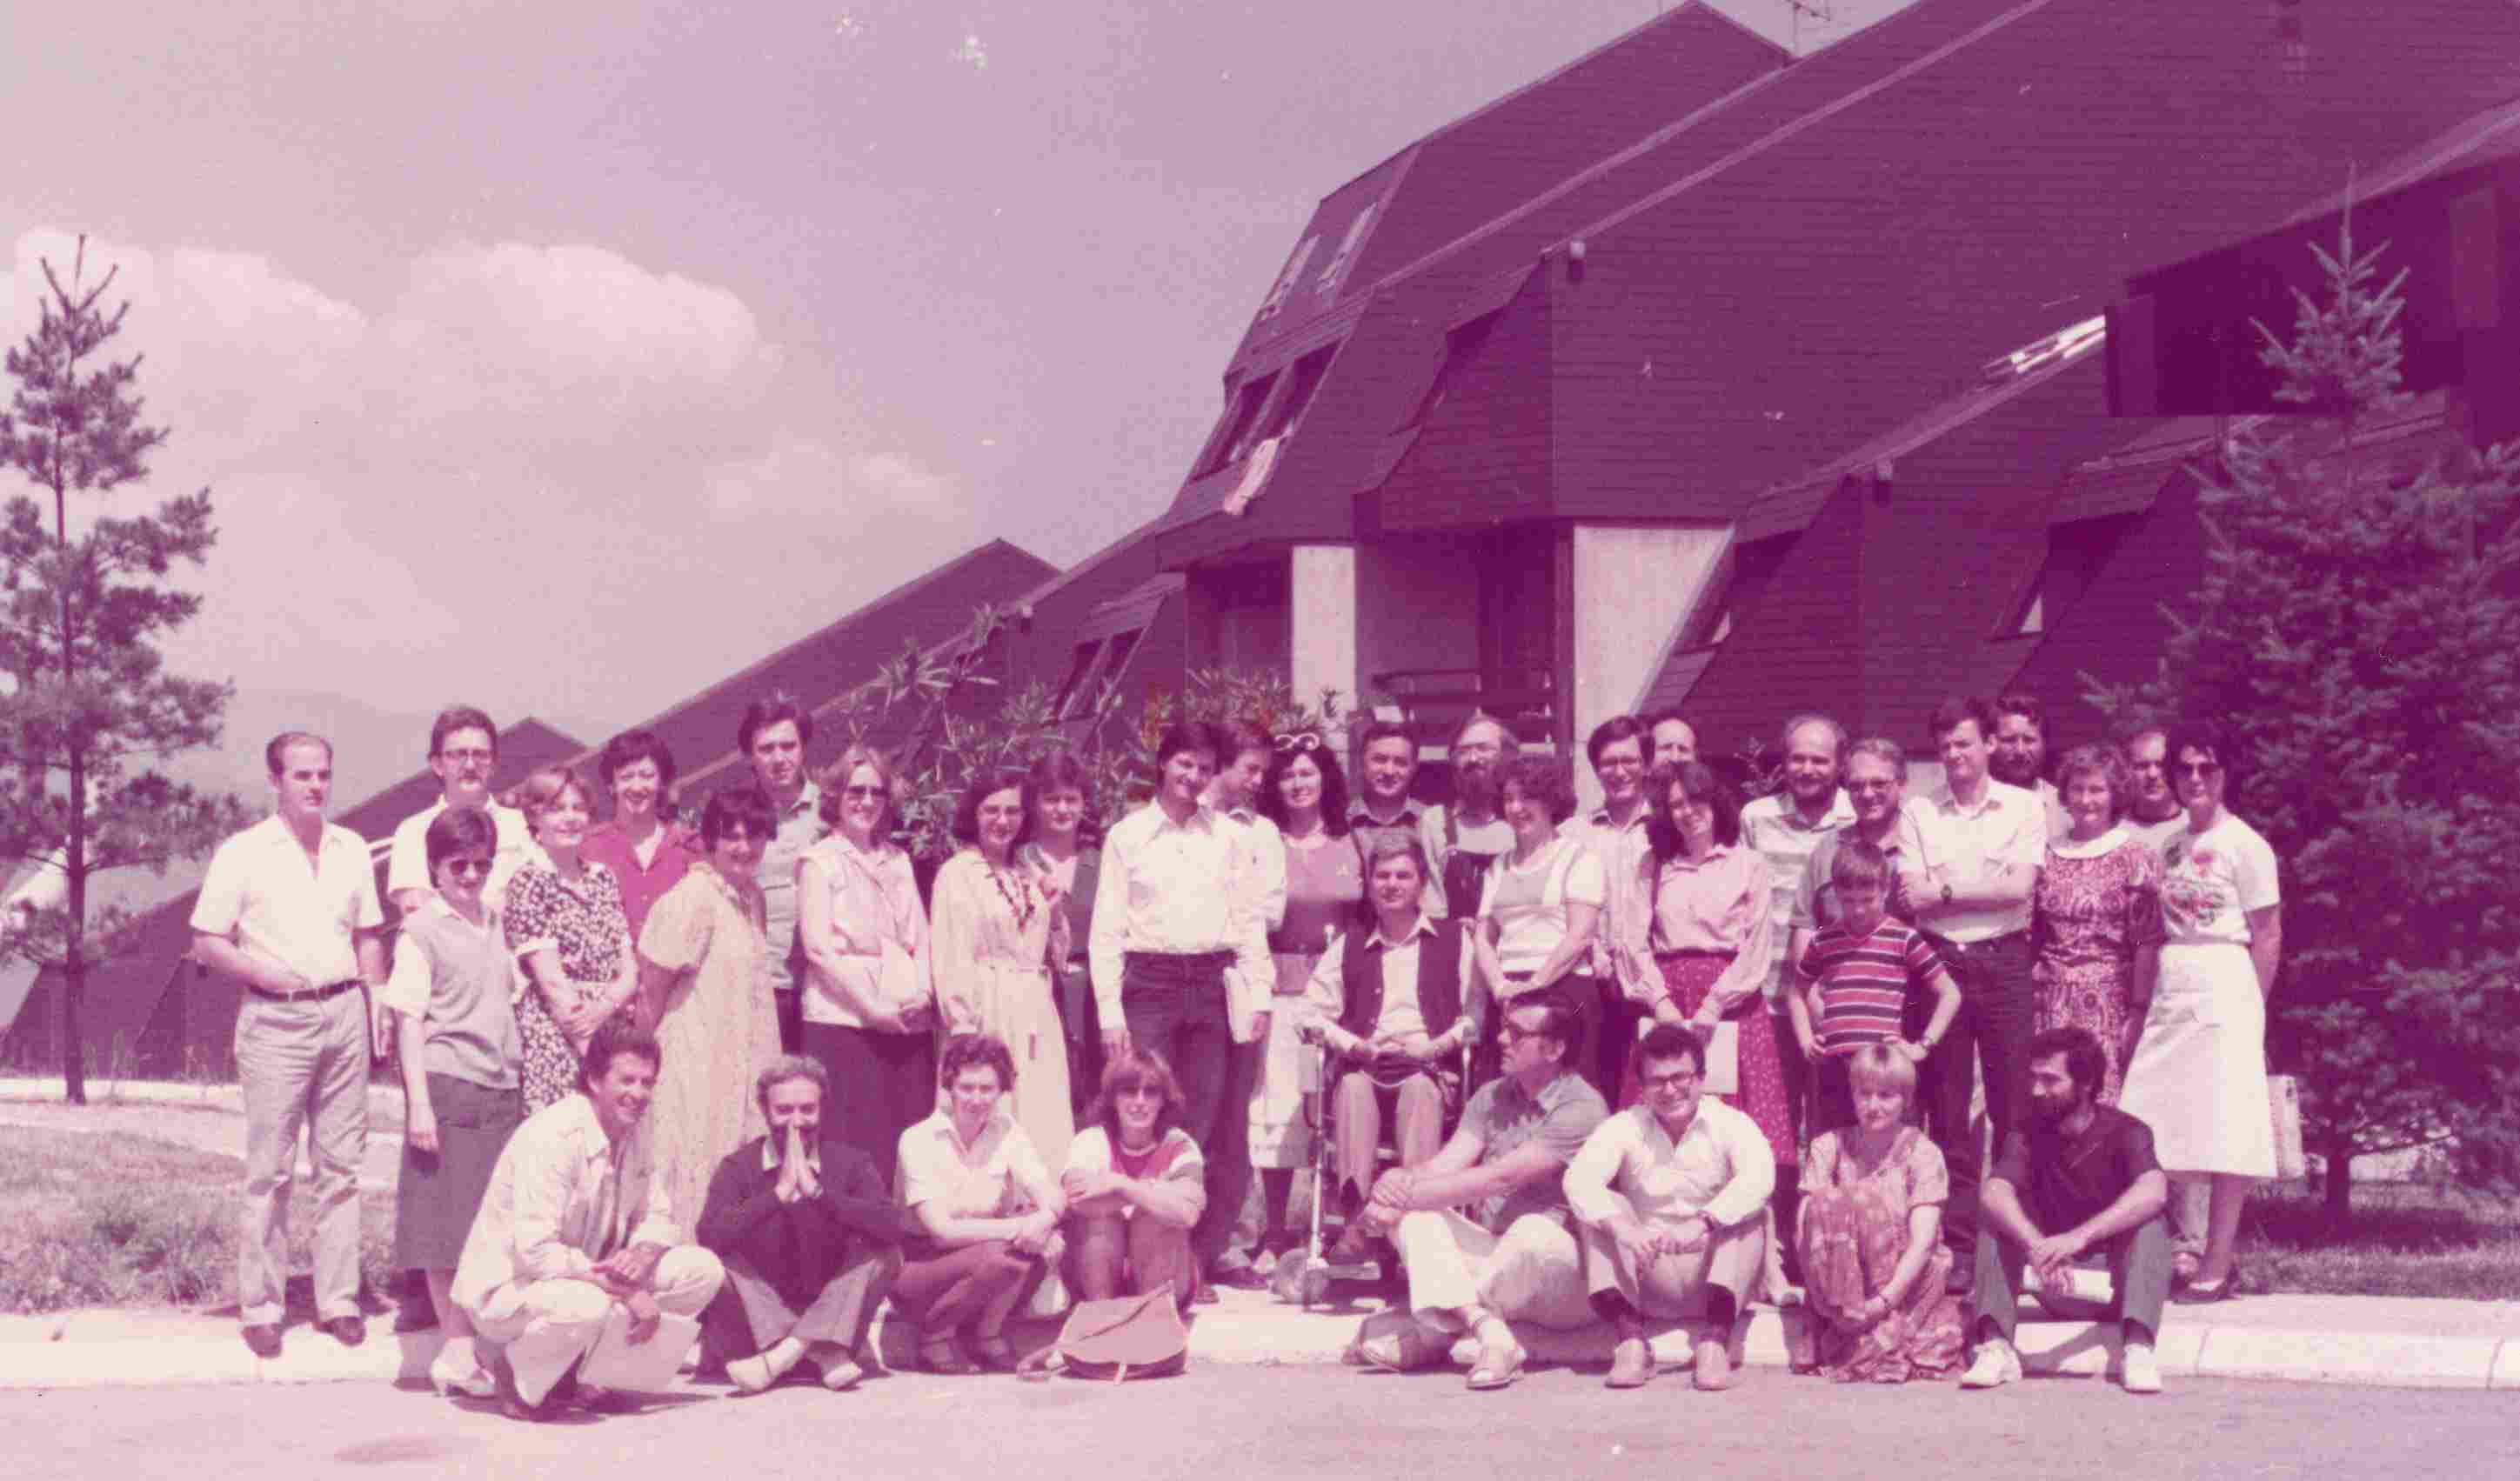 Yugoslav Symposium of Atomic Collision Processes, Donji Milanovac, 1983